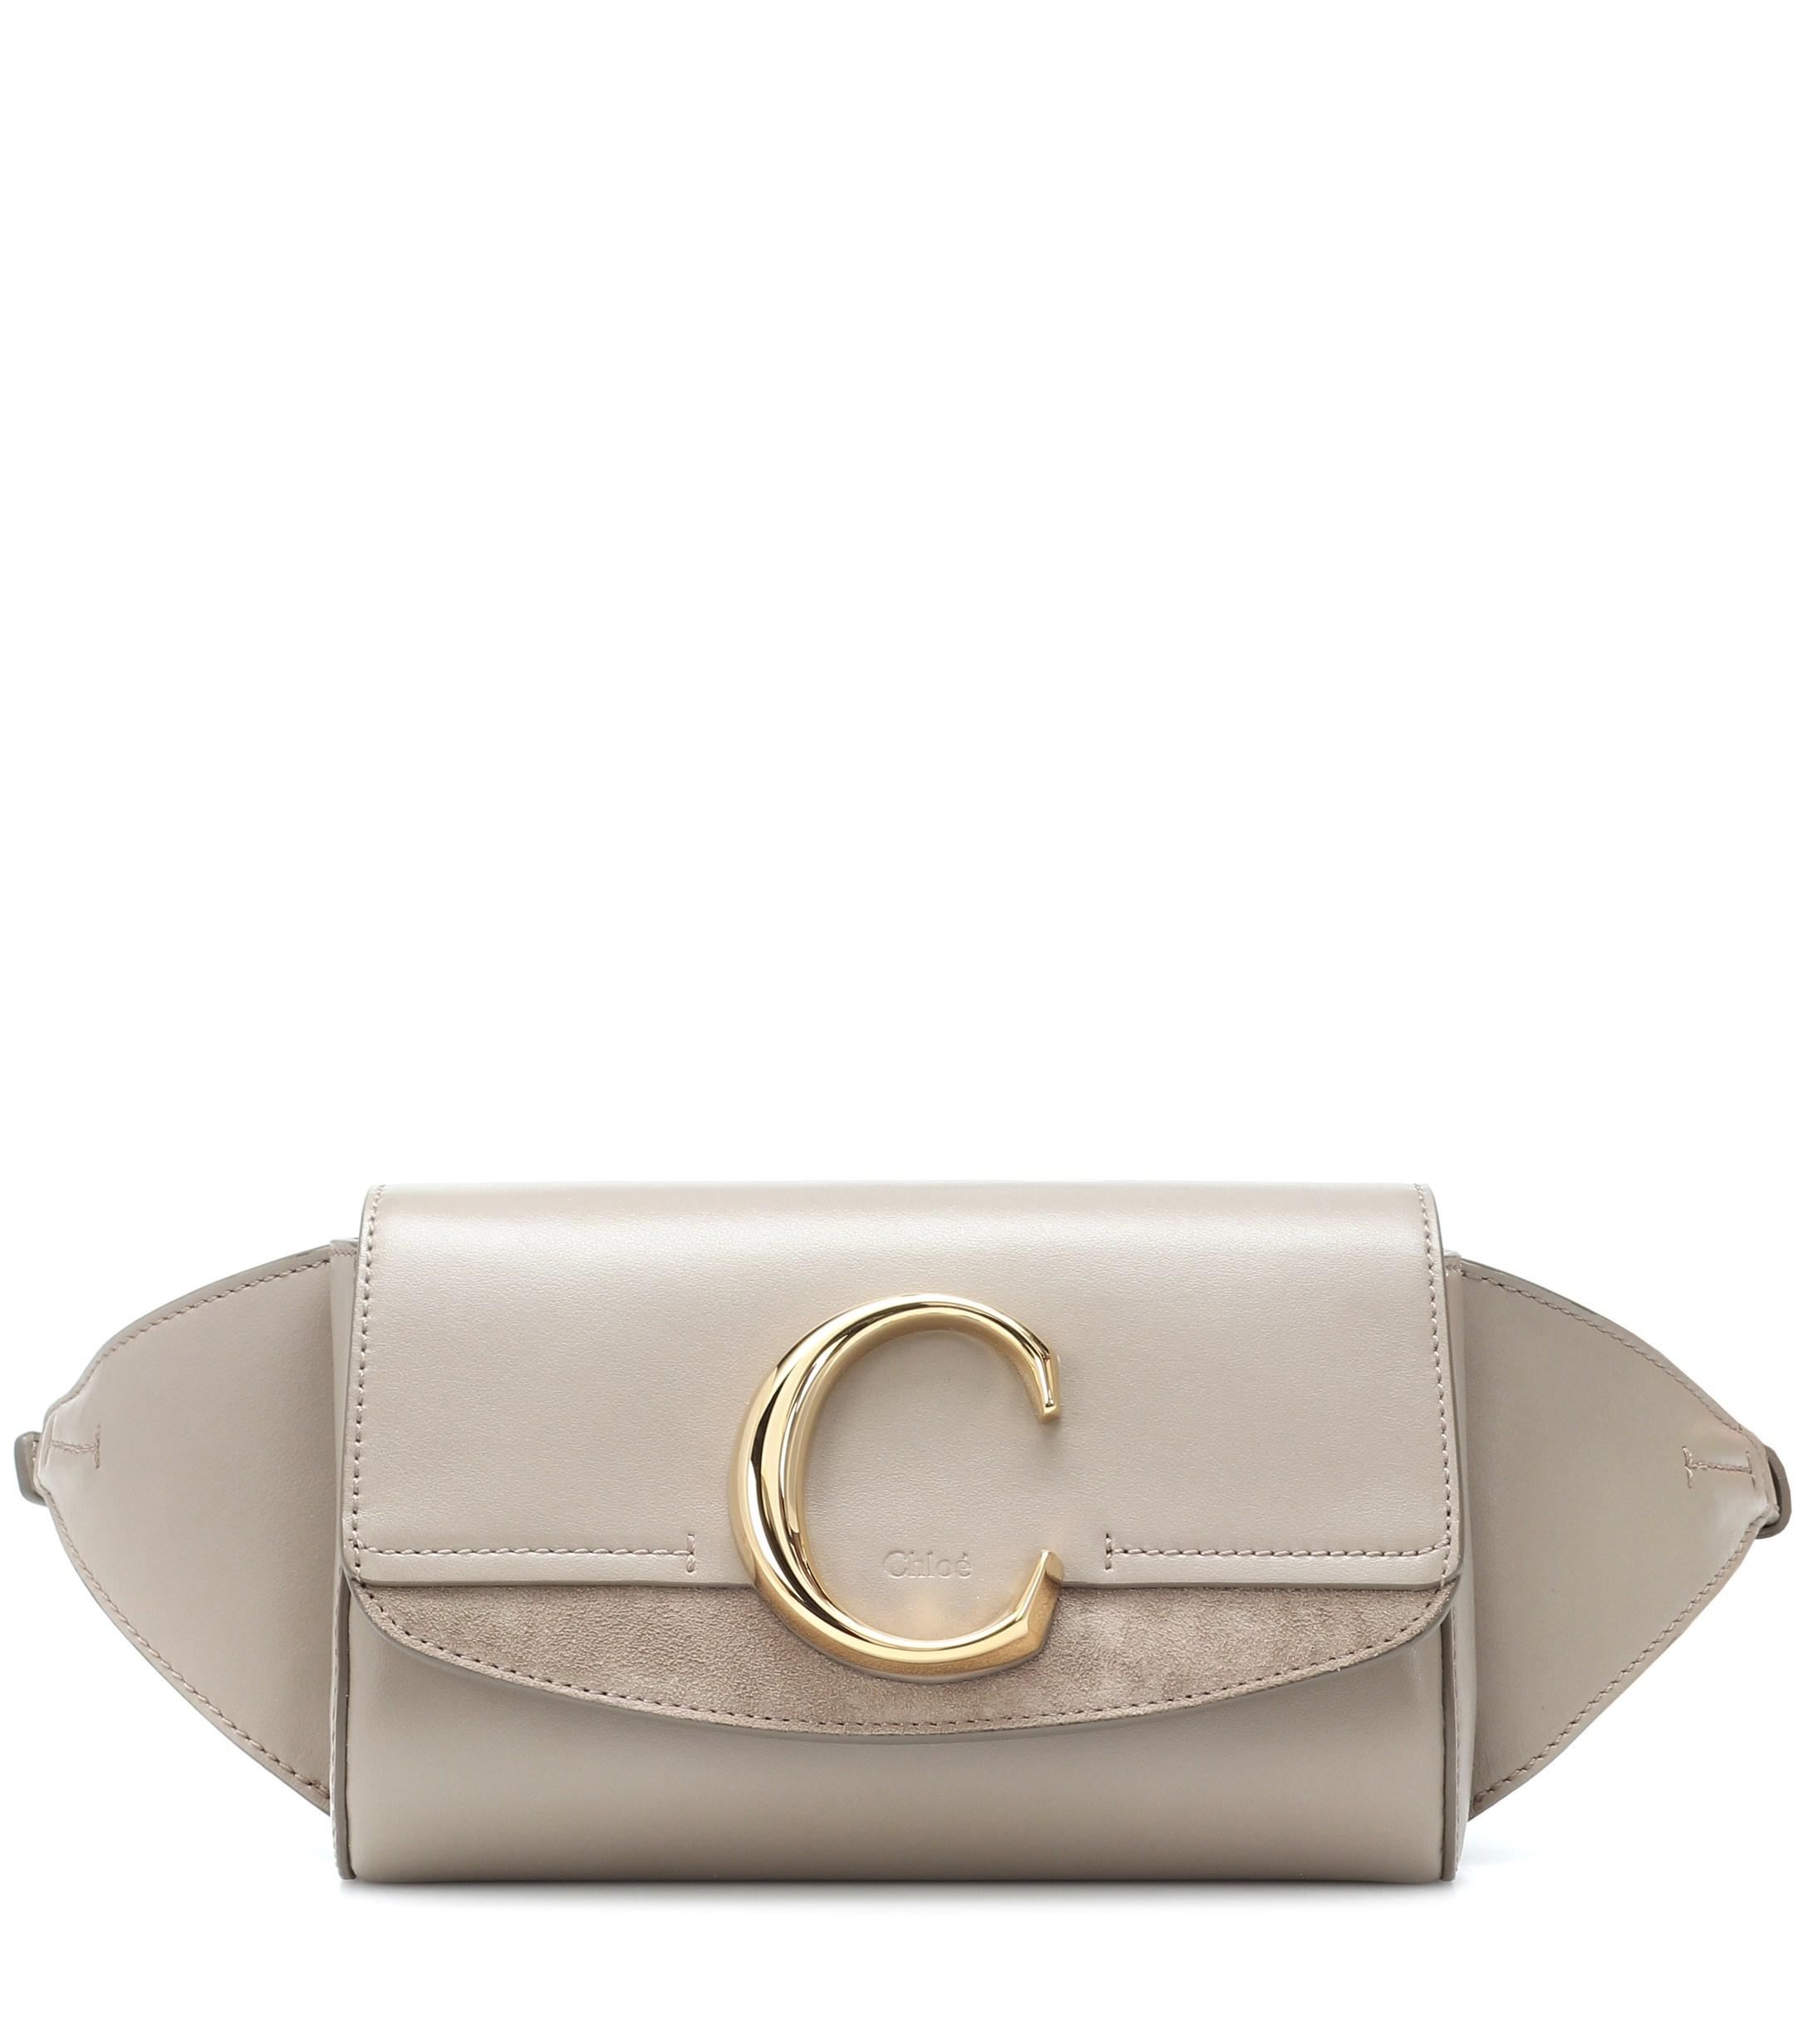 Chloé C Leather Belt Bag in Gray - Lyst